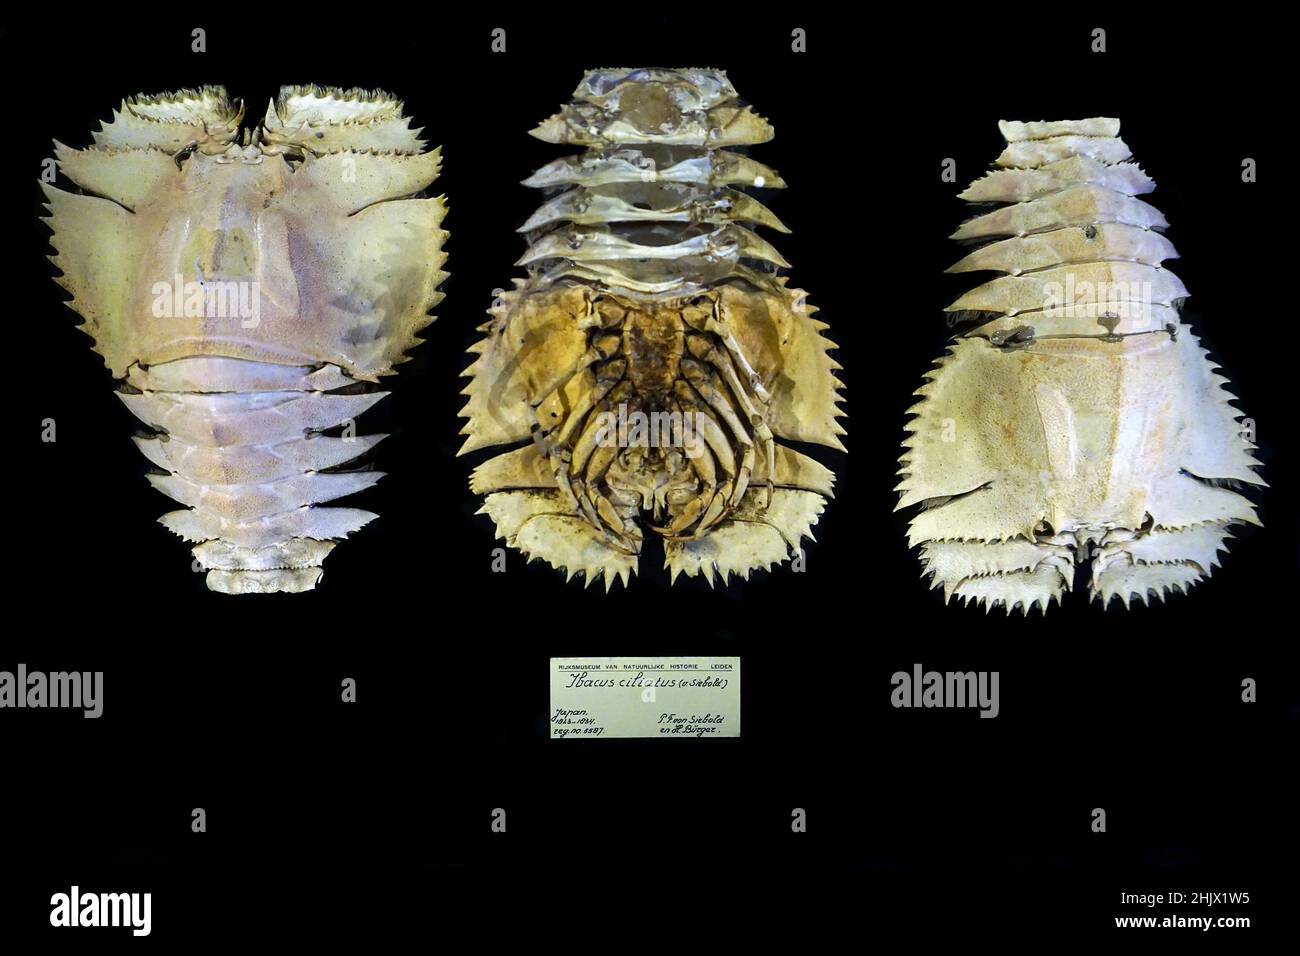 Ibacus ciliatus (von Siebold, 1824) the original specimen found by P.F.von Siebold and H.Burger in Japan 1823-1824. reg.no.5587  Ibacus ciliatus is a species of slipper lobster from the north-west Pacific Ocean Stock Photo